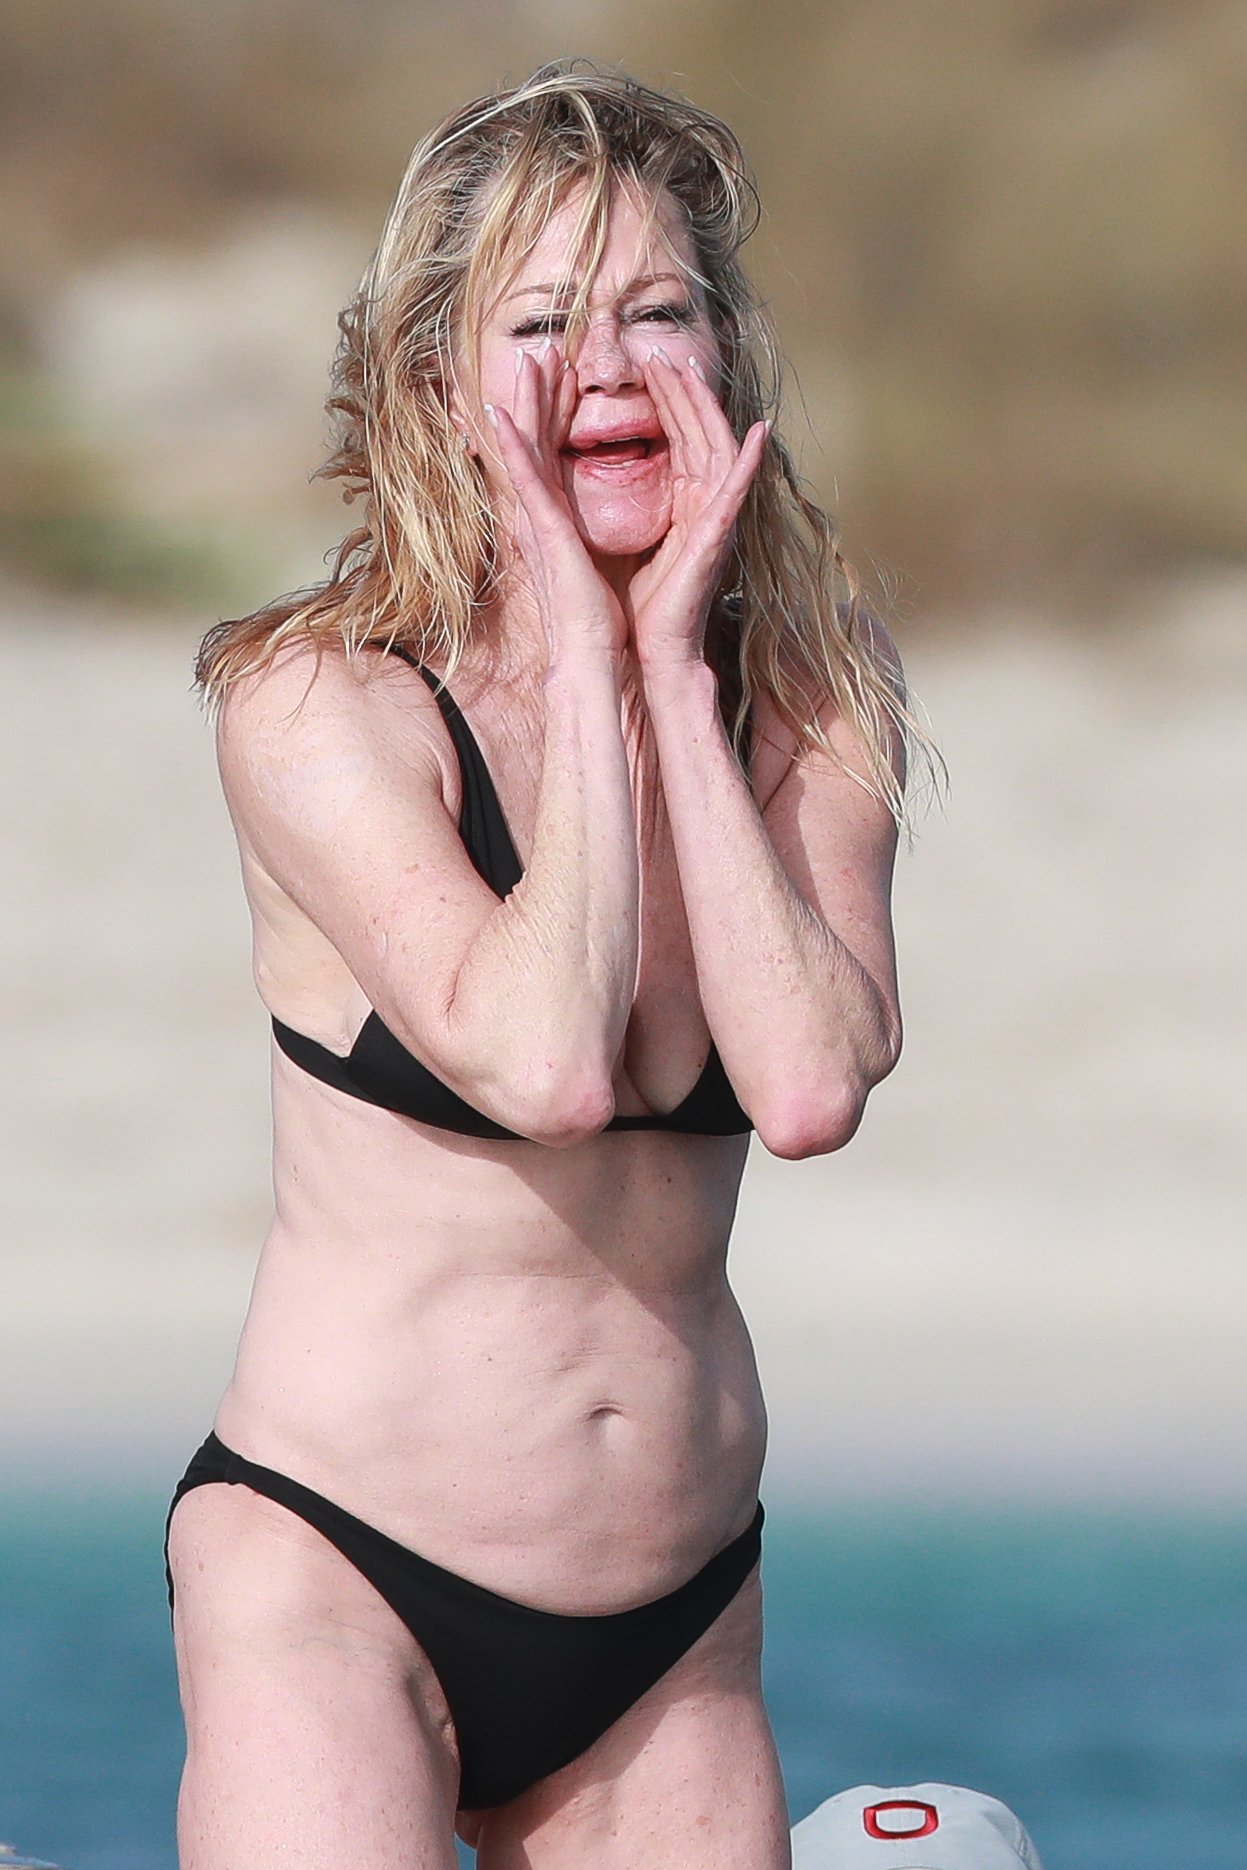 Melanie Griffith sense photoshop ni filtres: amb la cara destrossada i fumant